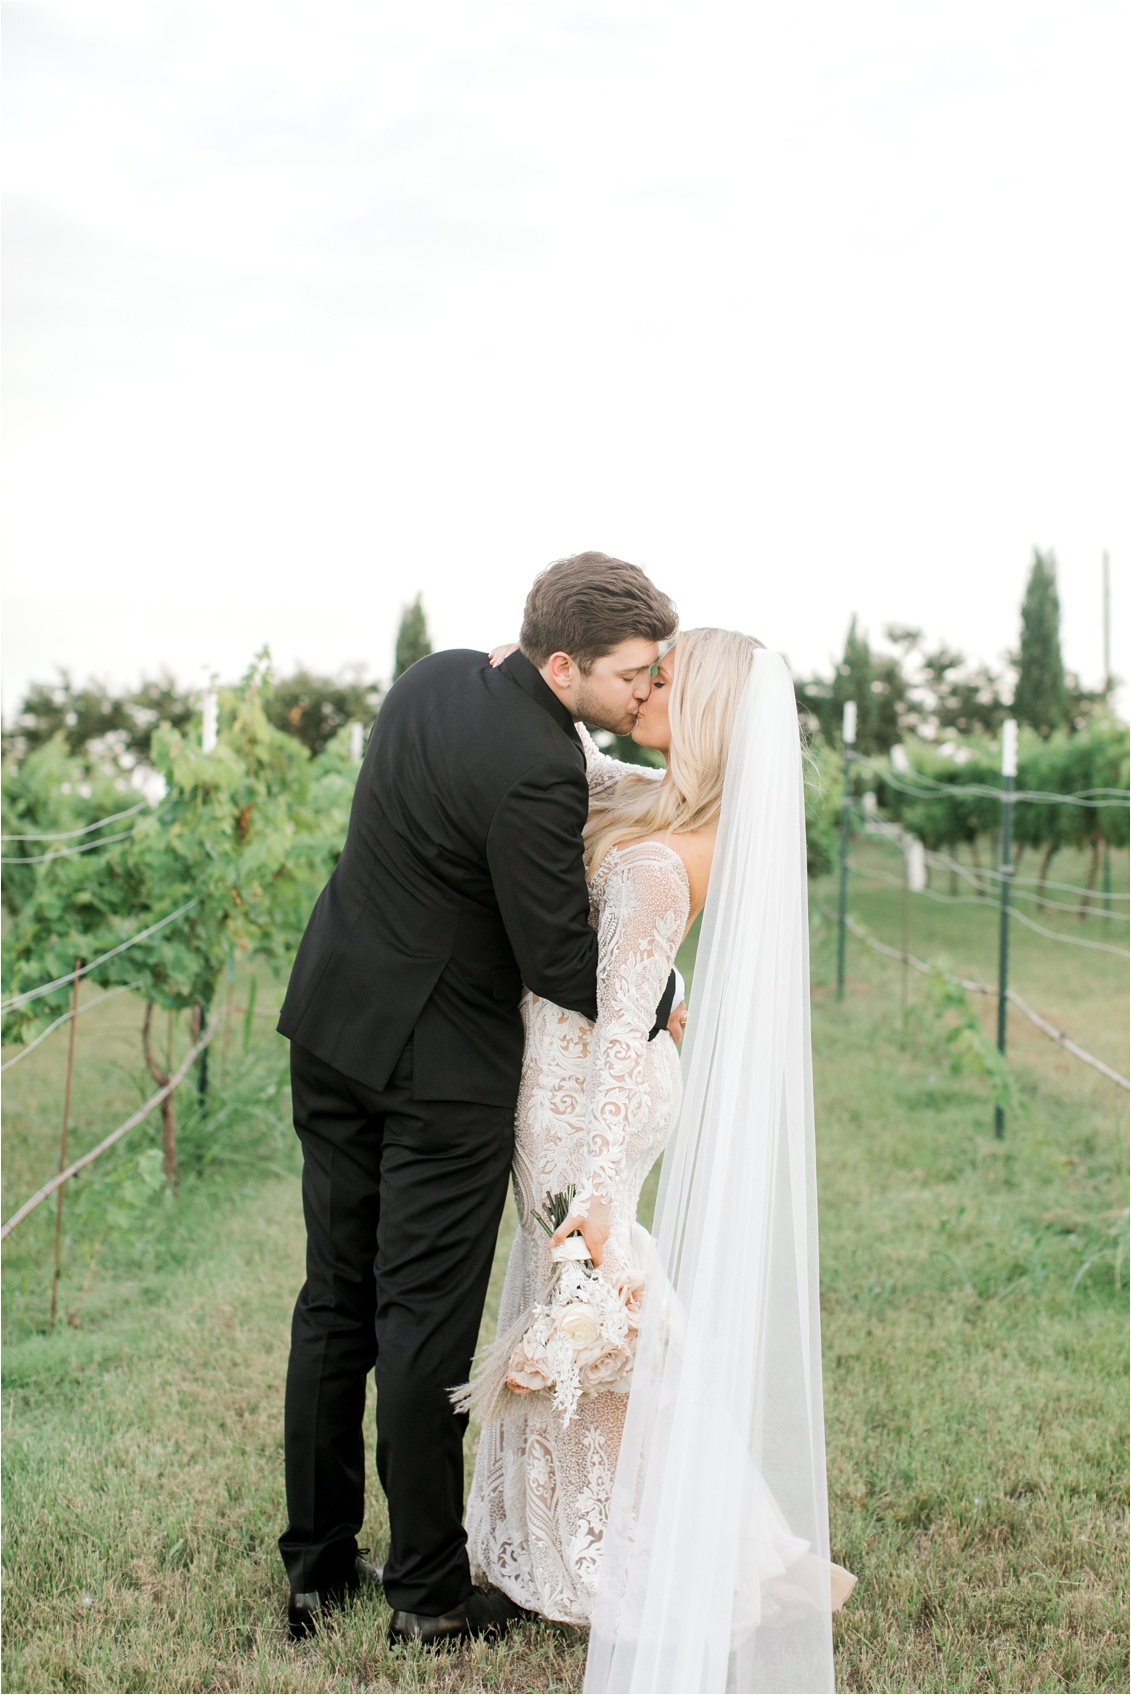 Boho Wedding Day at D'Vine Grace Vineyard by Gaby Caskey Photography, DFW Wedding Photographer, bride and groom portraits, vineyard wedding